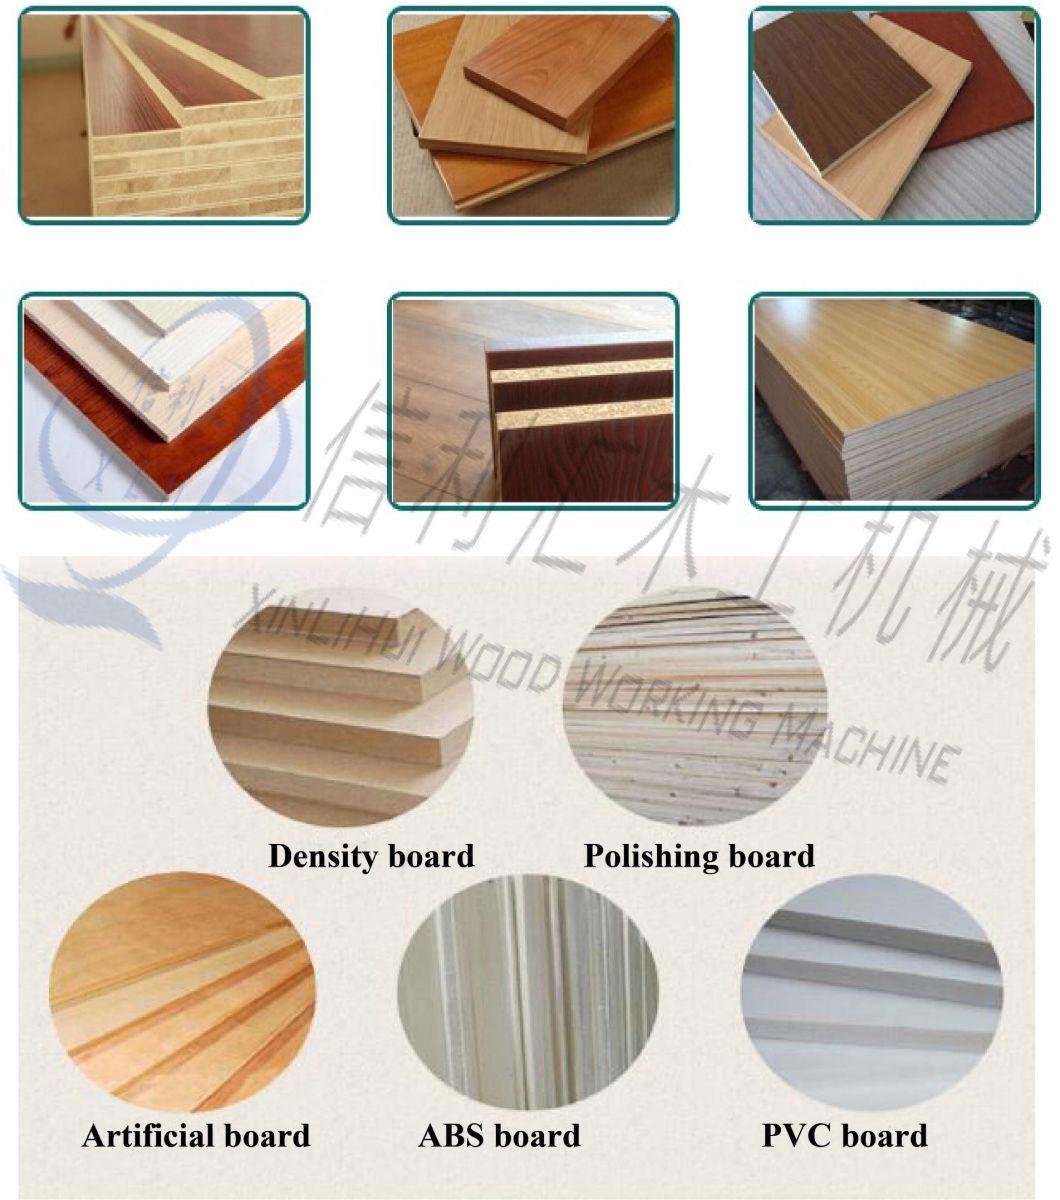 Semi Automatic Lamination Press 1200 T: for Flooring: 2 Paper Laying / 1800 T: for Furniture: 2 Paper Laying / 1500 T: for Furniture: 2 Paper